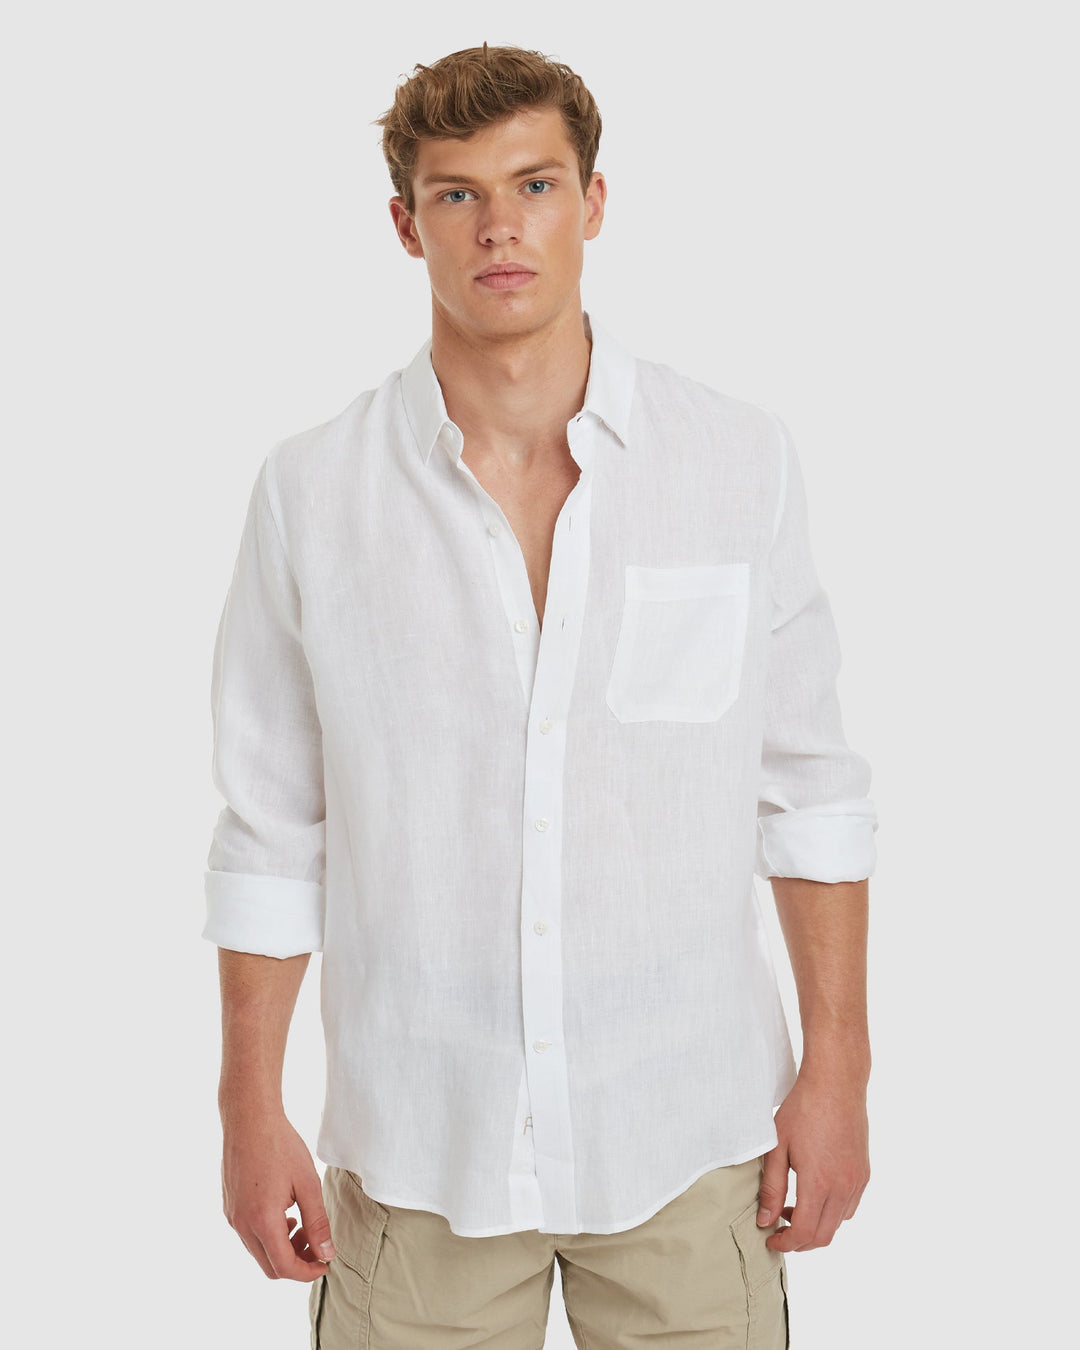 Tulum-Casual White Linen Shirt Long sleeve